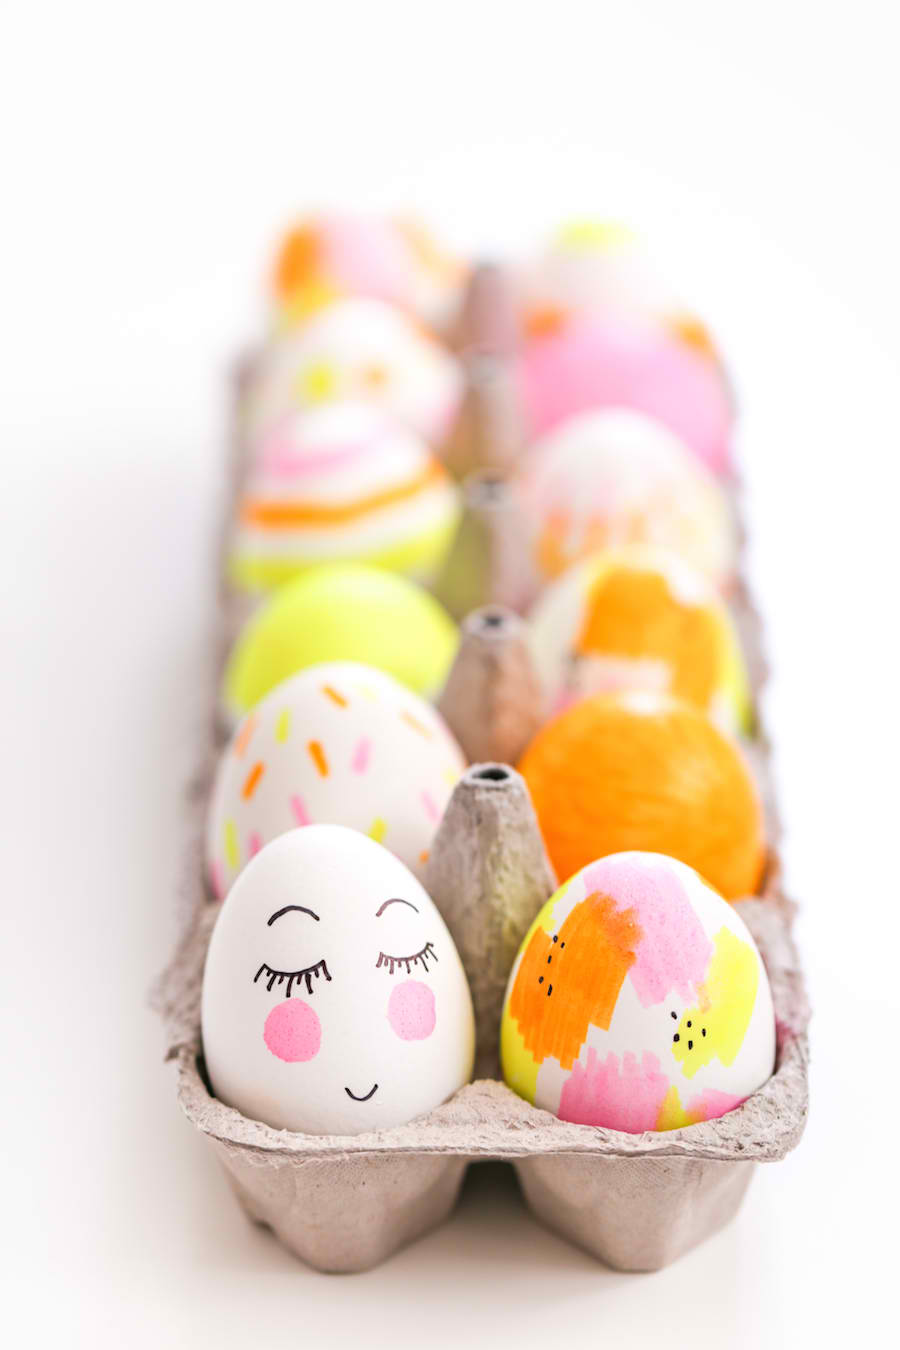 Highlighted Easter eggs